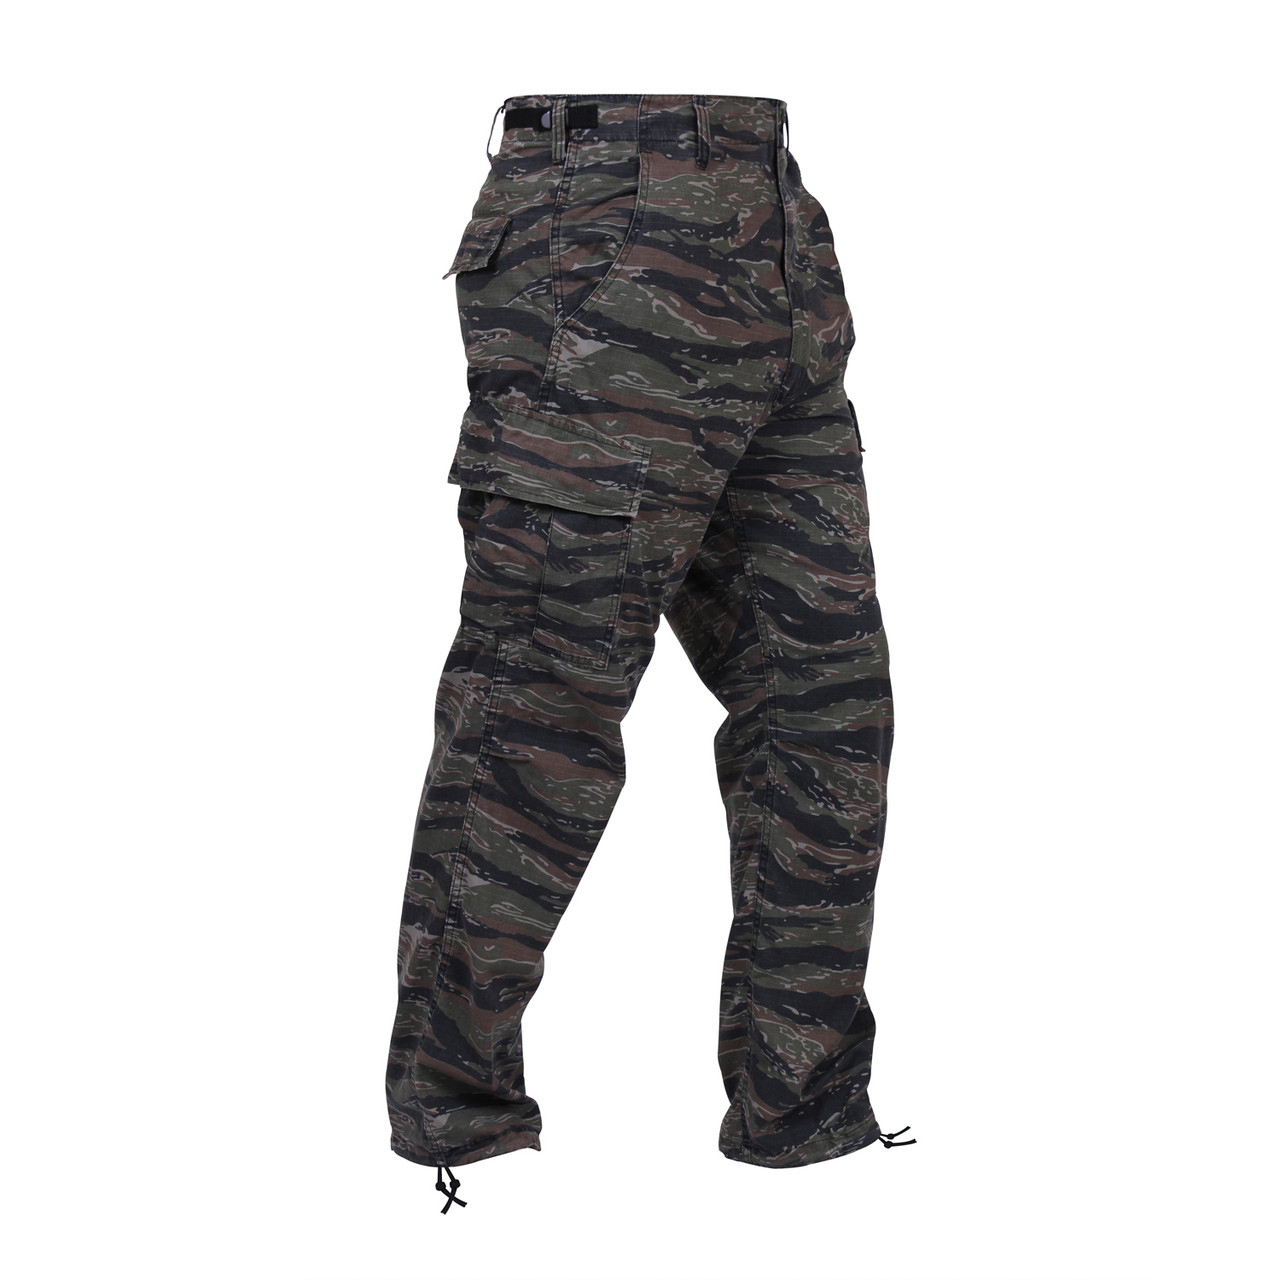 Woodland Camo Tactical B.D.U Cargo Pants